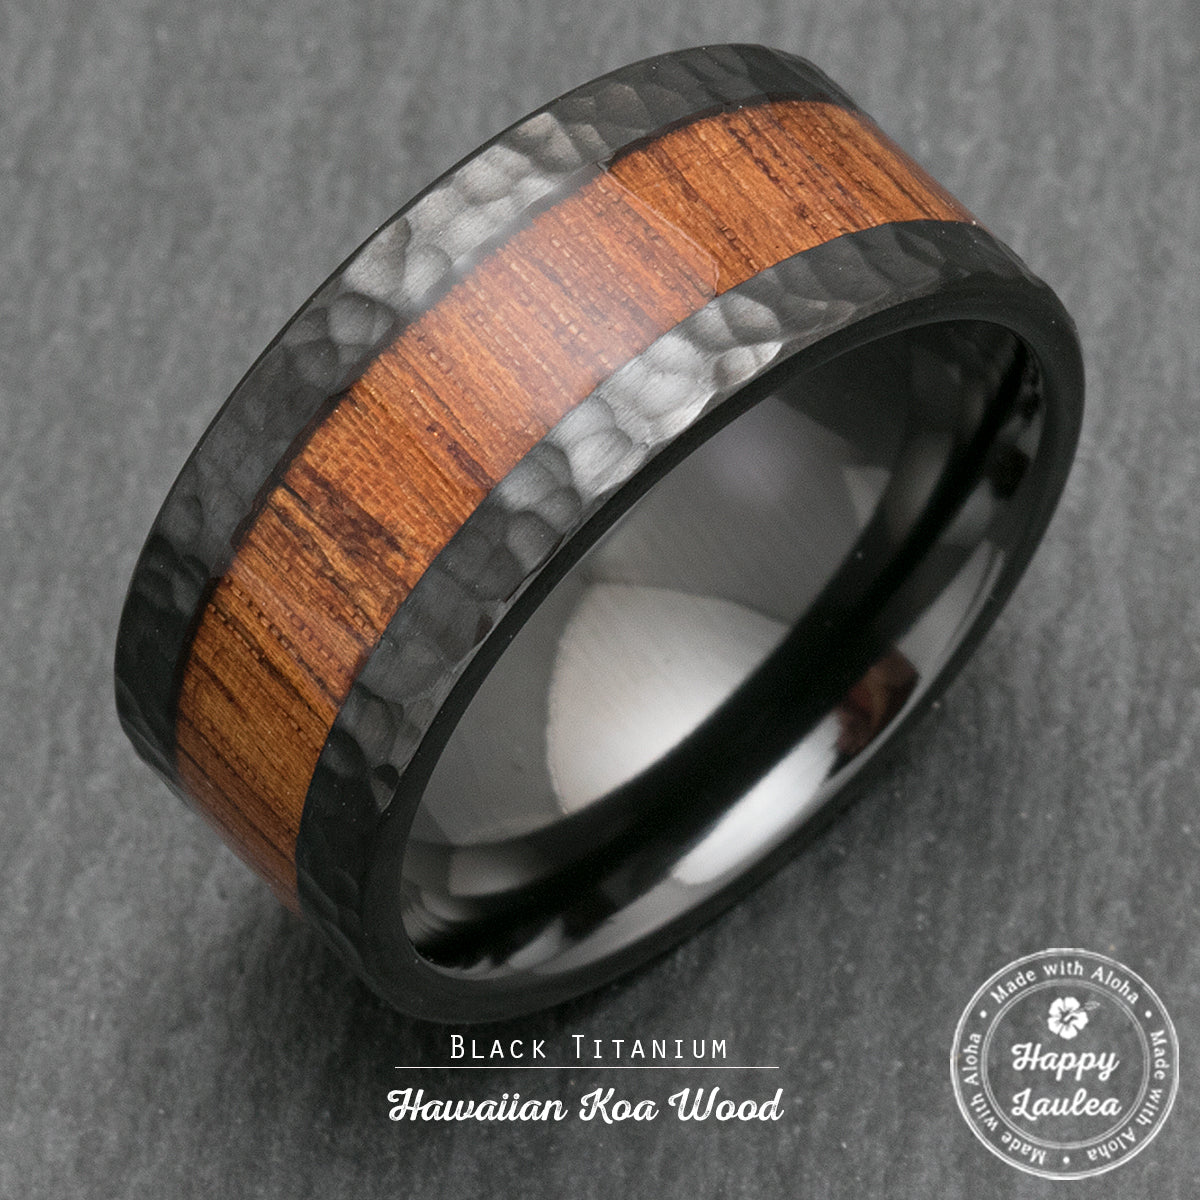 Black Zirconium Hammered Ring [10mm Width] Hawaiian Koa Wood Inlay - Flat Shape, Comfort Fitment